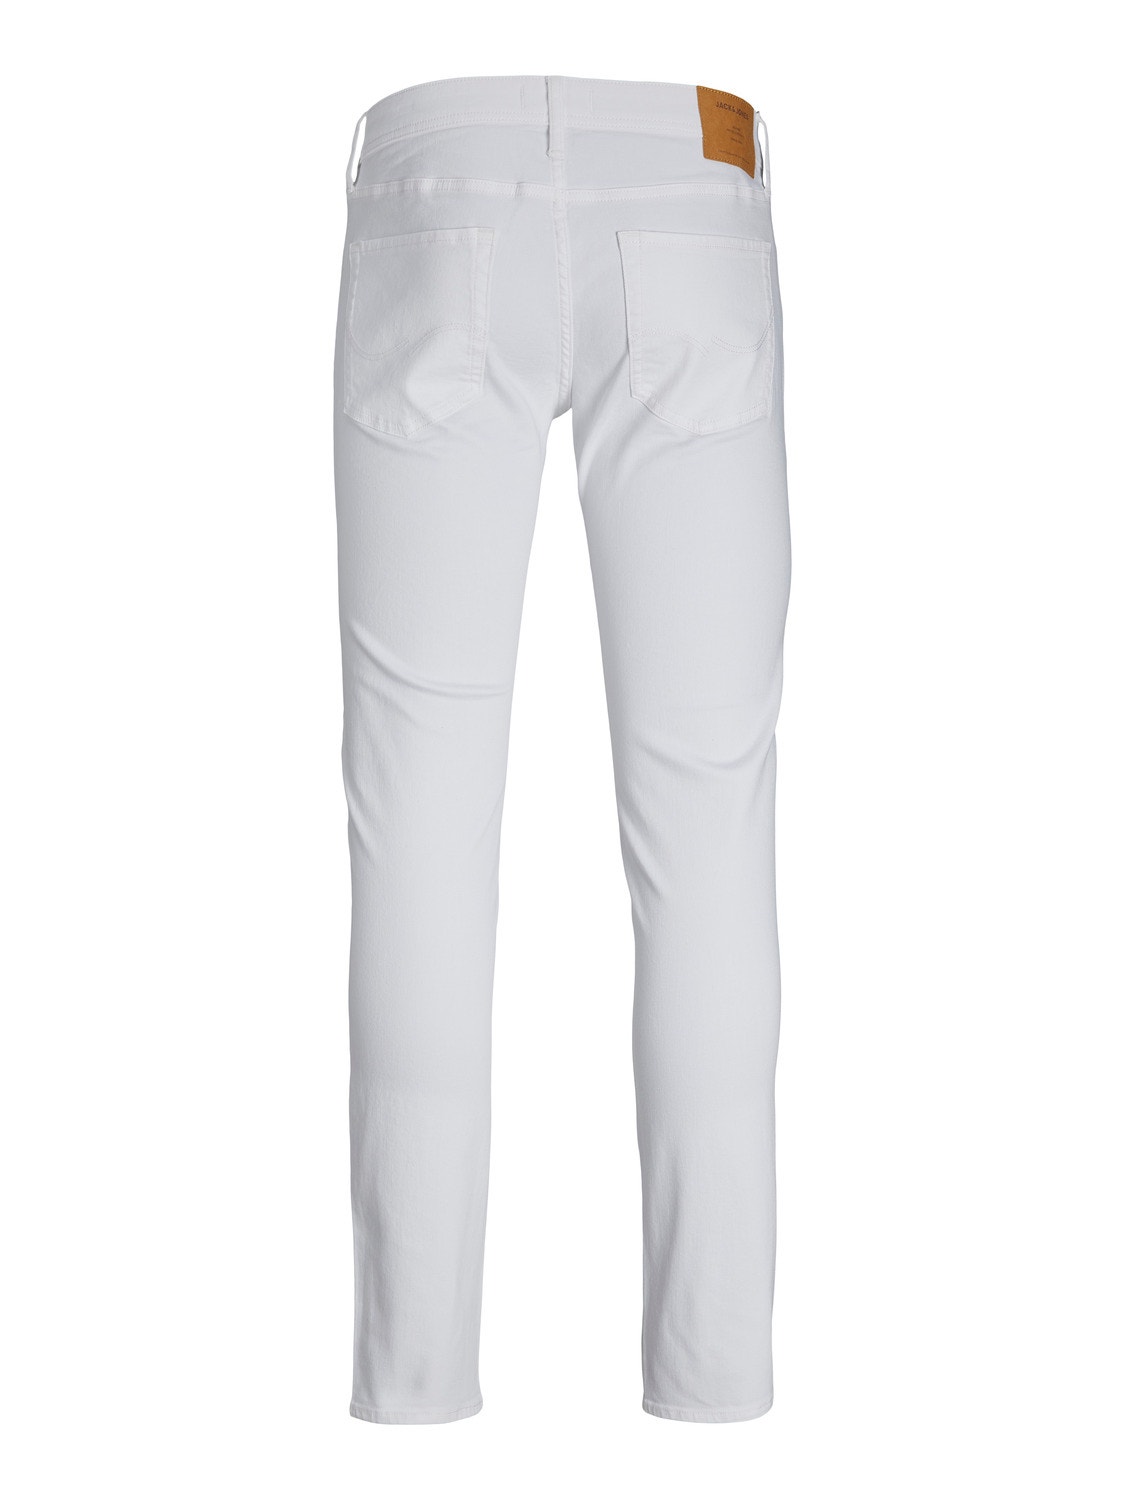 JJIGLENN JJORIGINAL MF 221 Slim fit jeans | White | Jack & Jones®